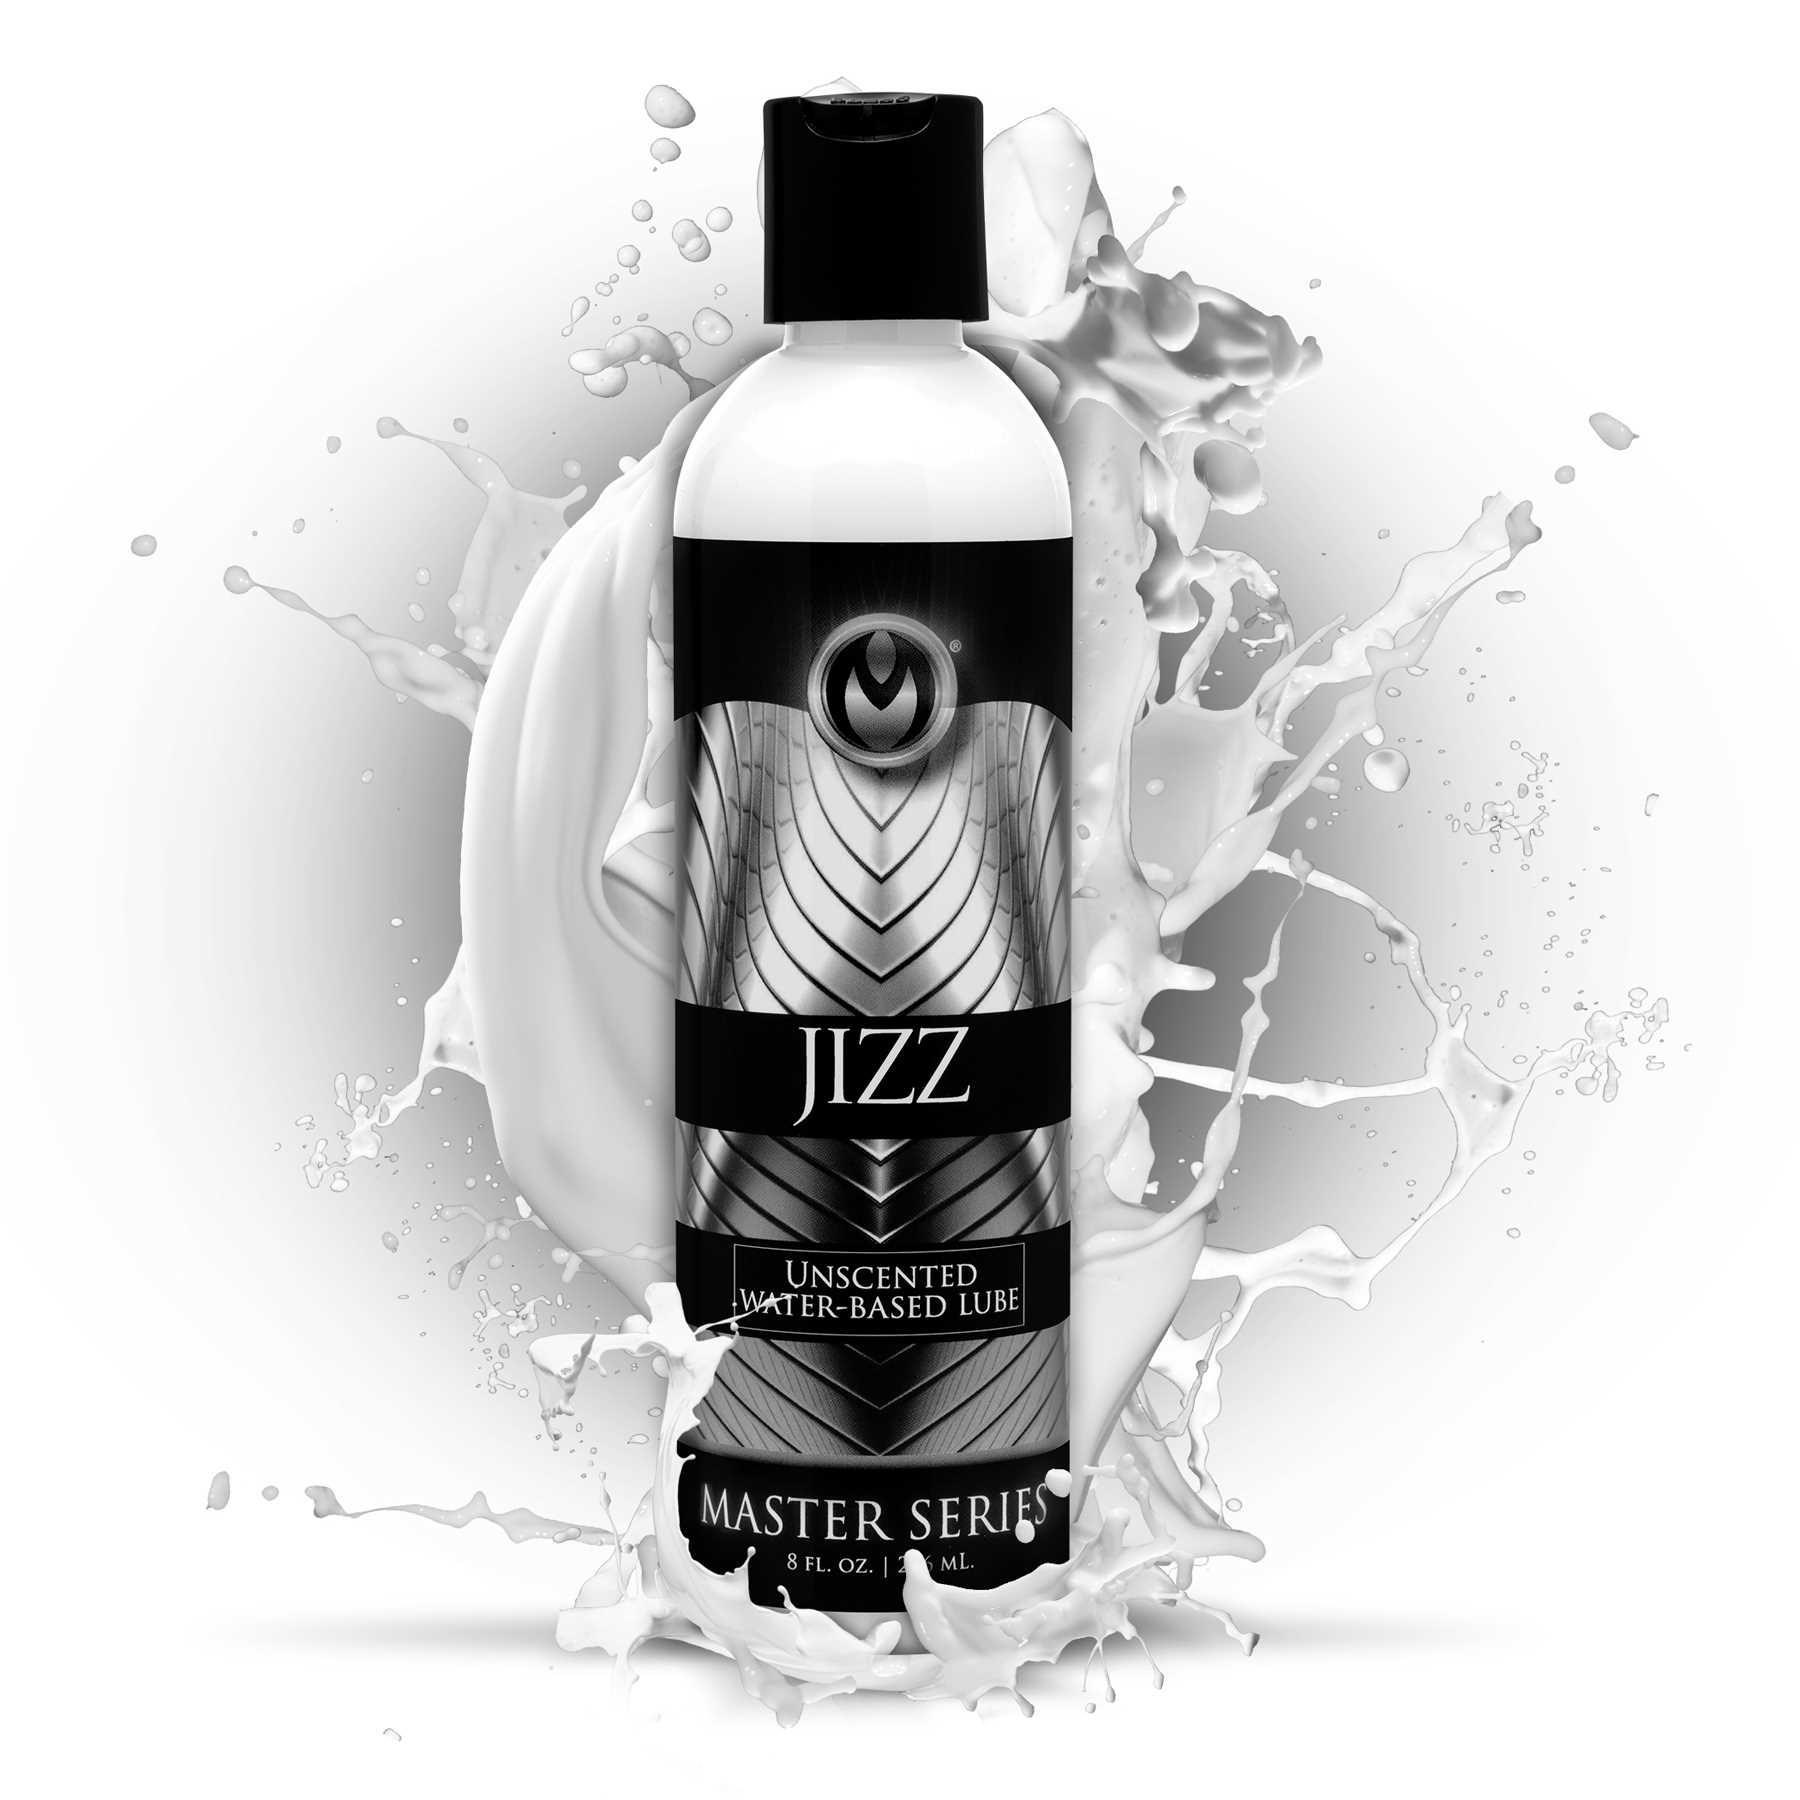 I389 Jizz Juice bottle ad